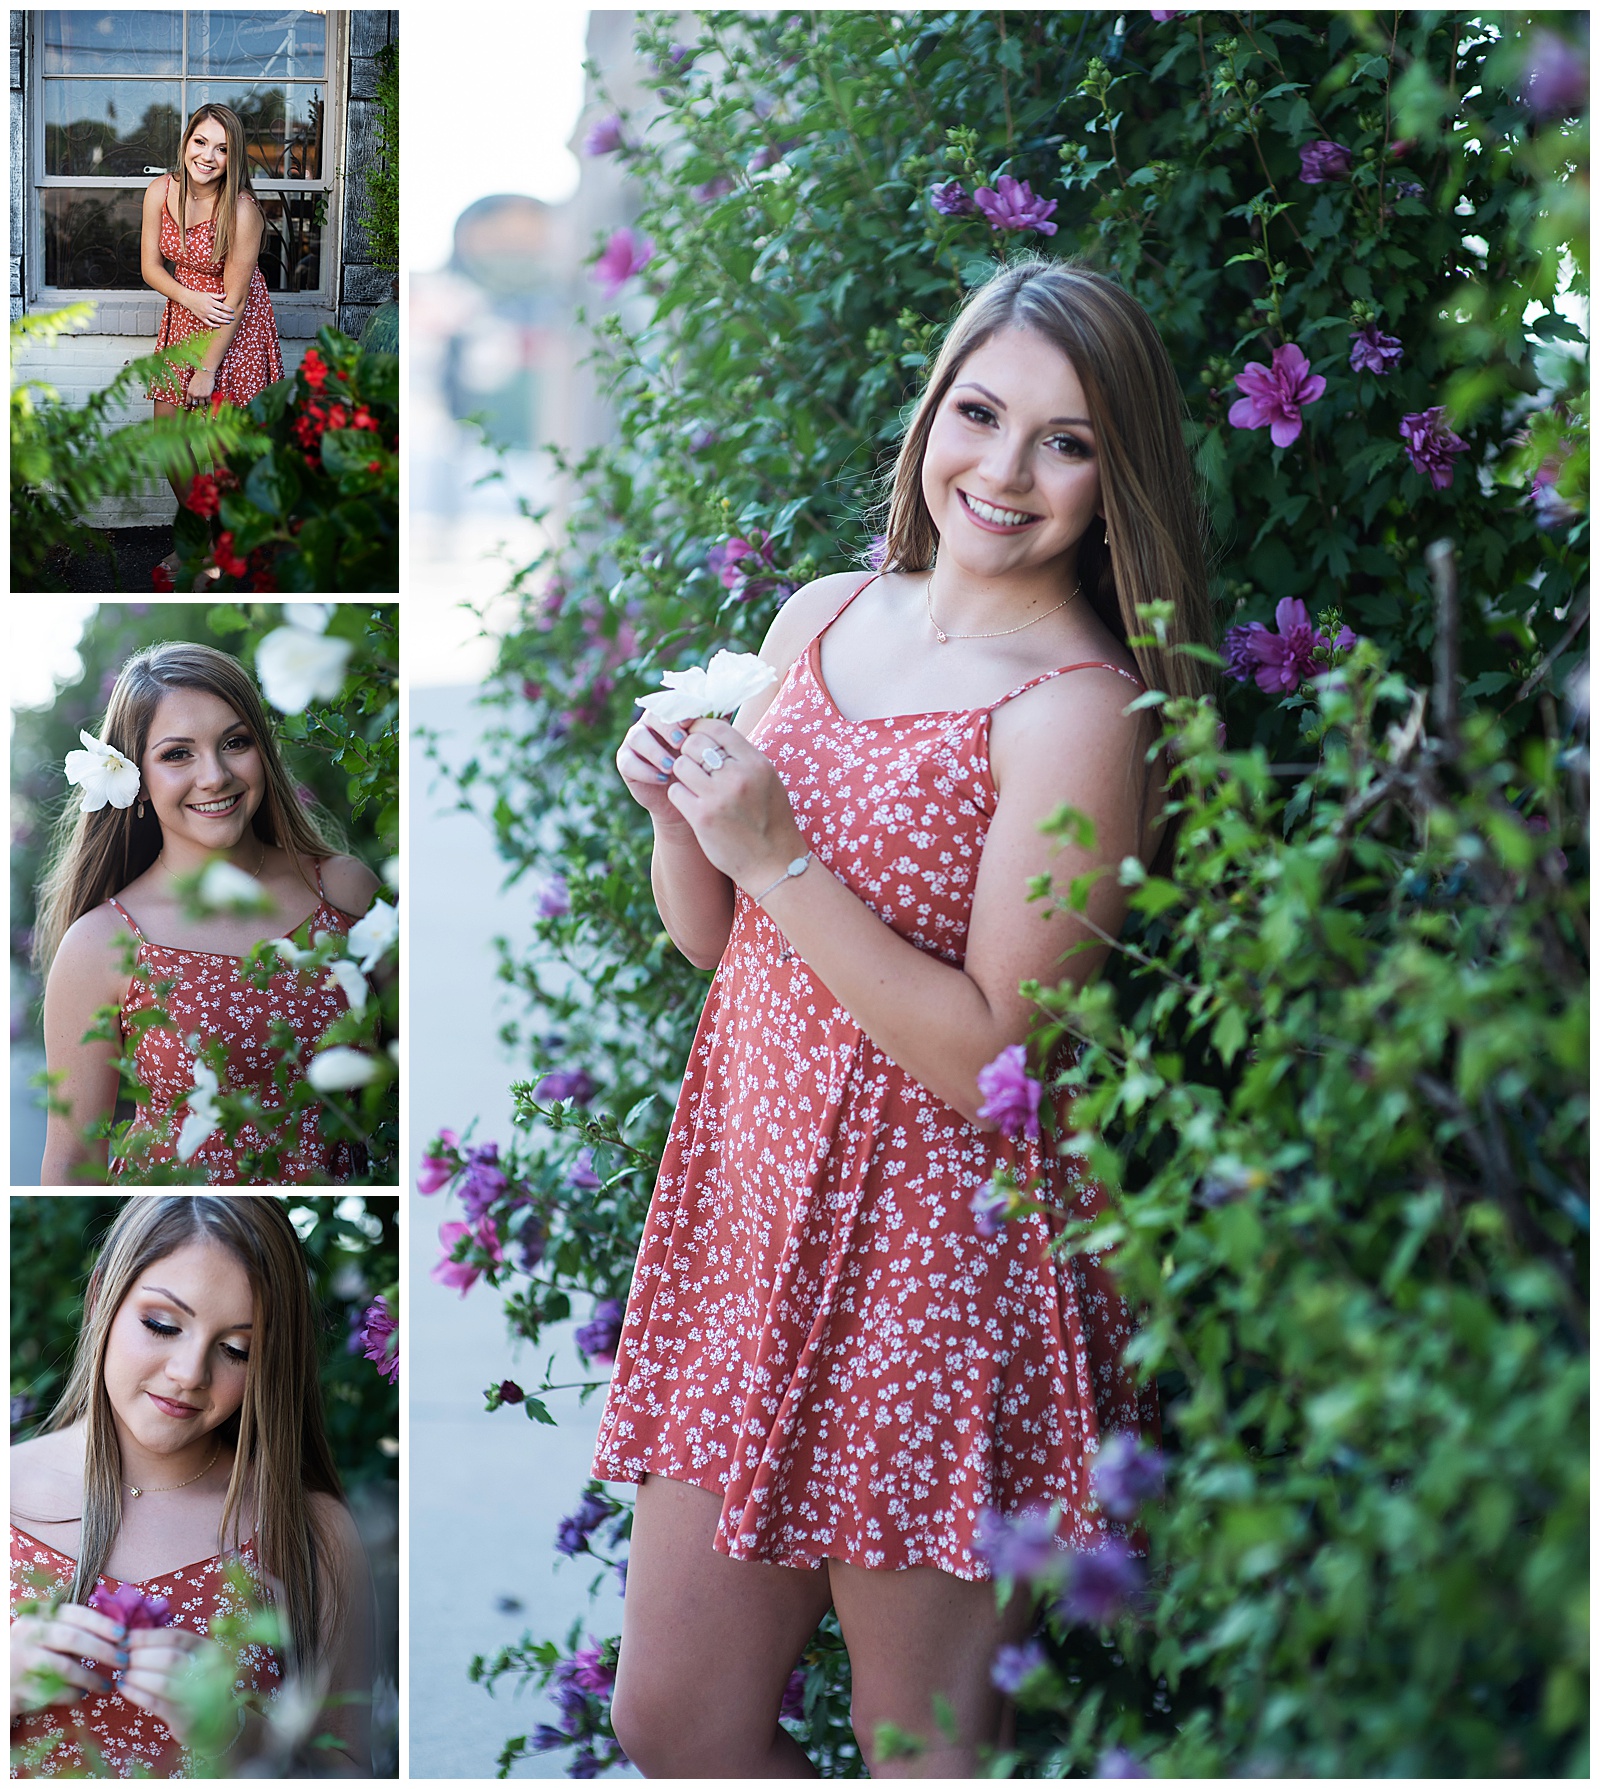 Beautiful senior girl floral downtown in dress